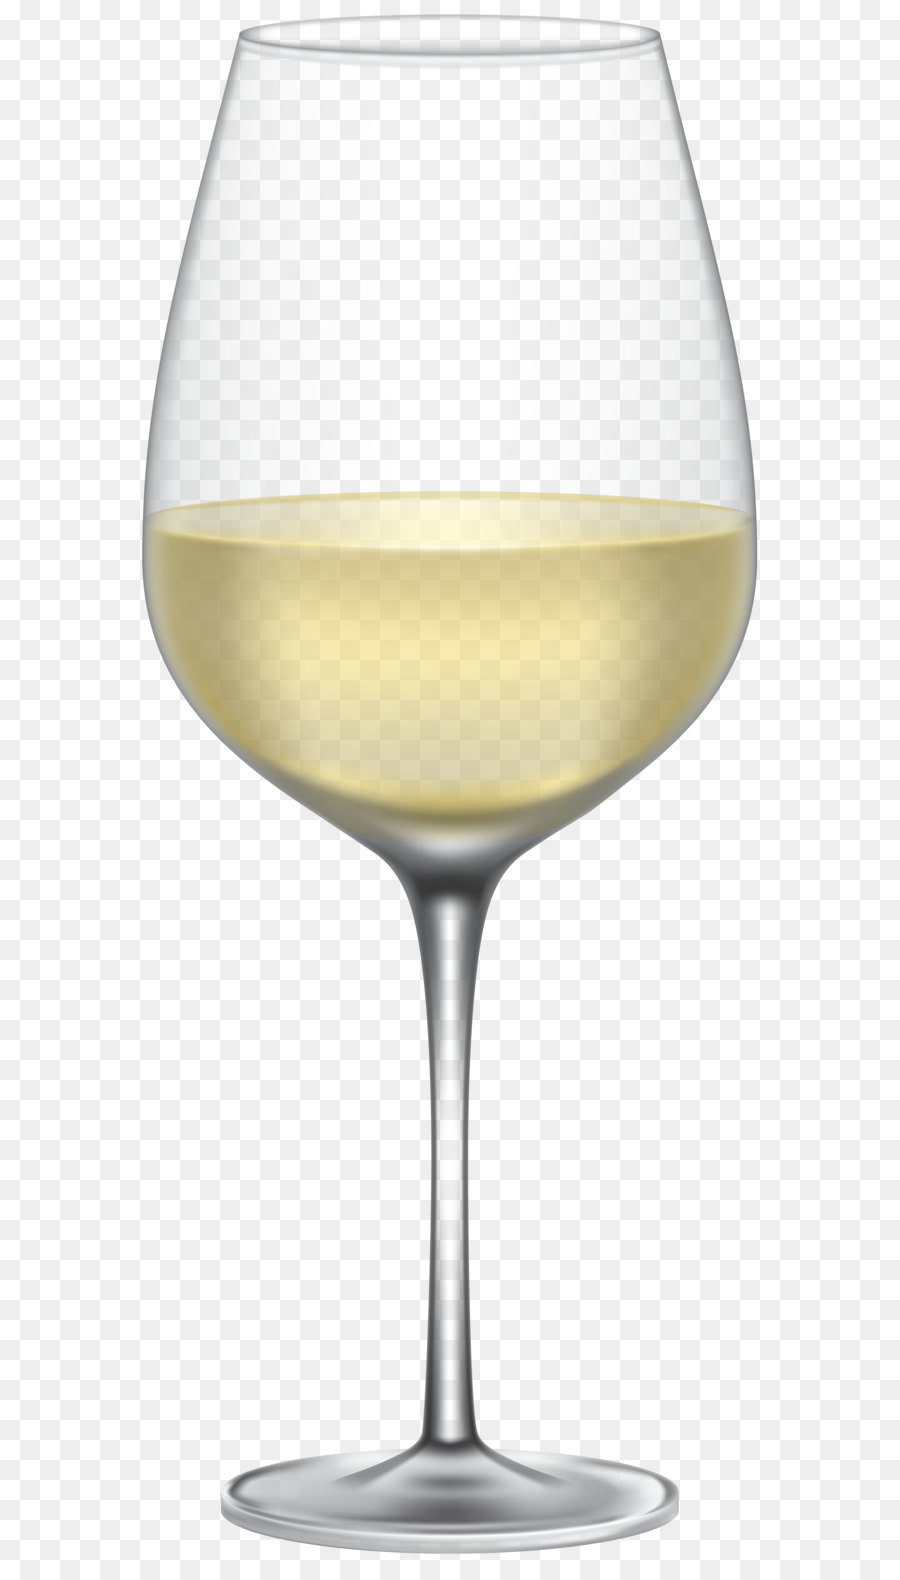 Red Wine White wine Cabernet Sauvignon Merlot - Glass of Red Wine Transparent Clip Art Image png download - 3329*8000 - Free Transparent Red Wine png Download.